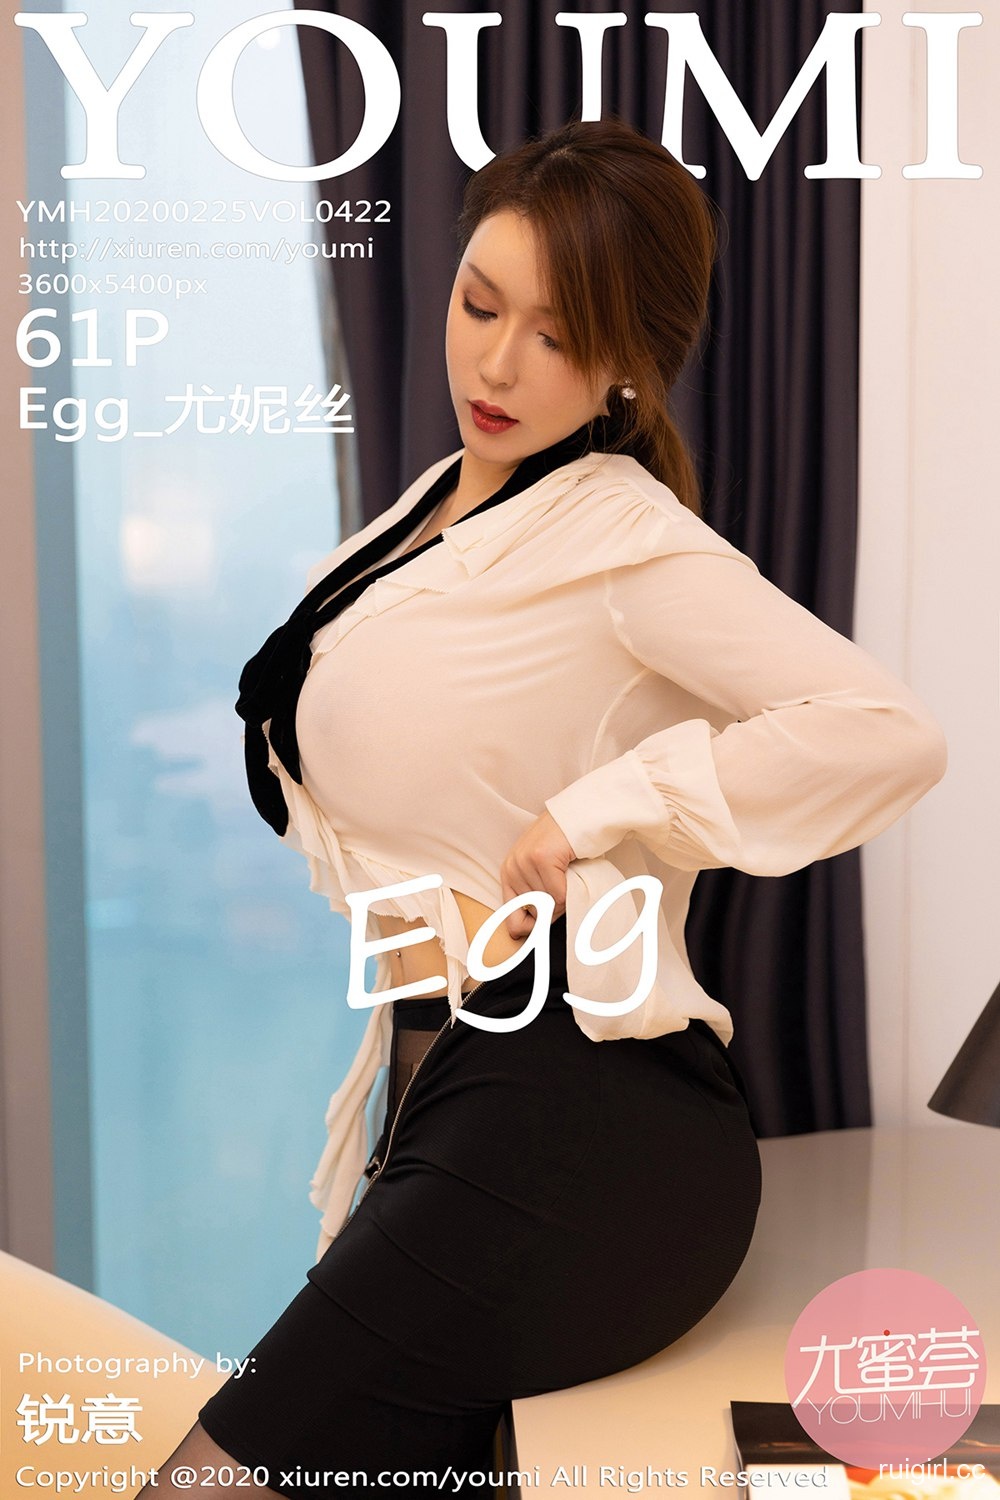 [YOUMI尤蜜荟] 2020.02.25 VOL.422 Egg_尤妮丝 [61+1P]